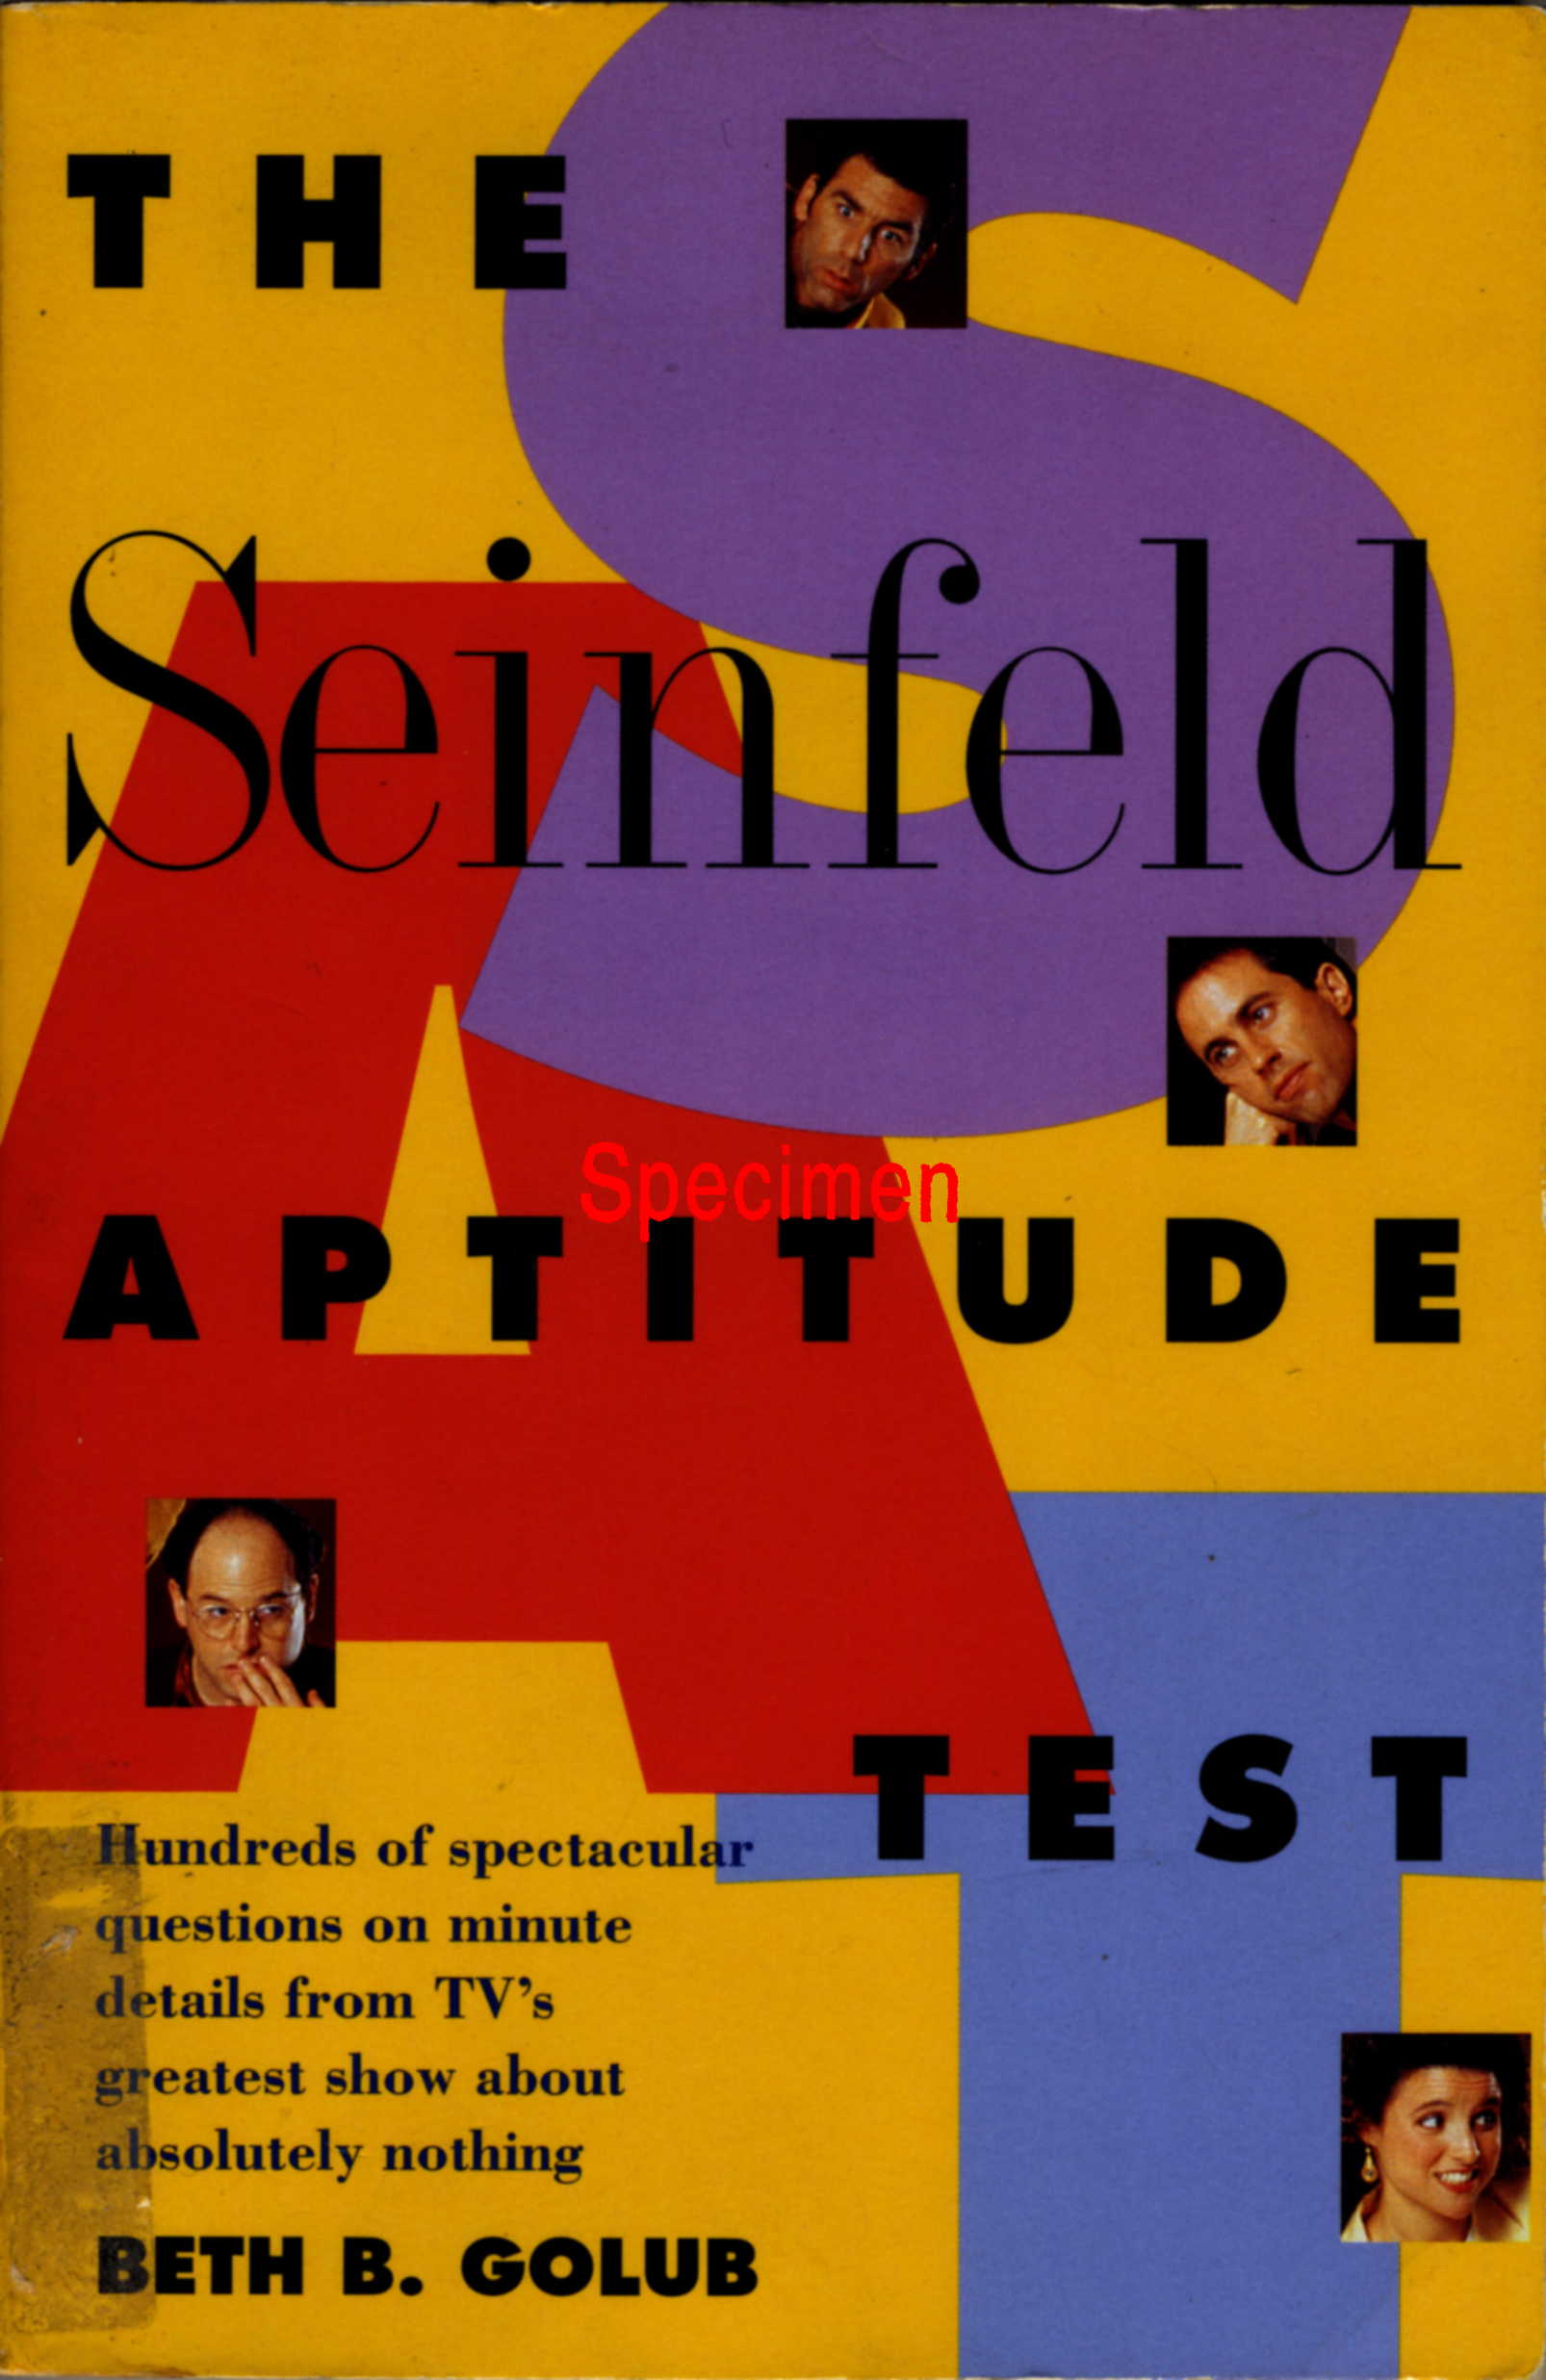 thing 001285 (The Seinfeld Aptitude Test)